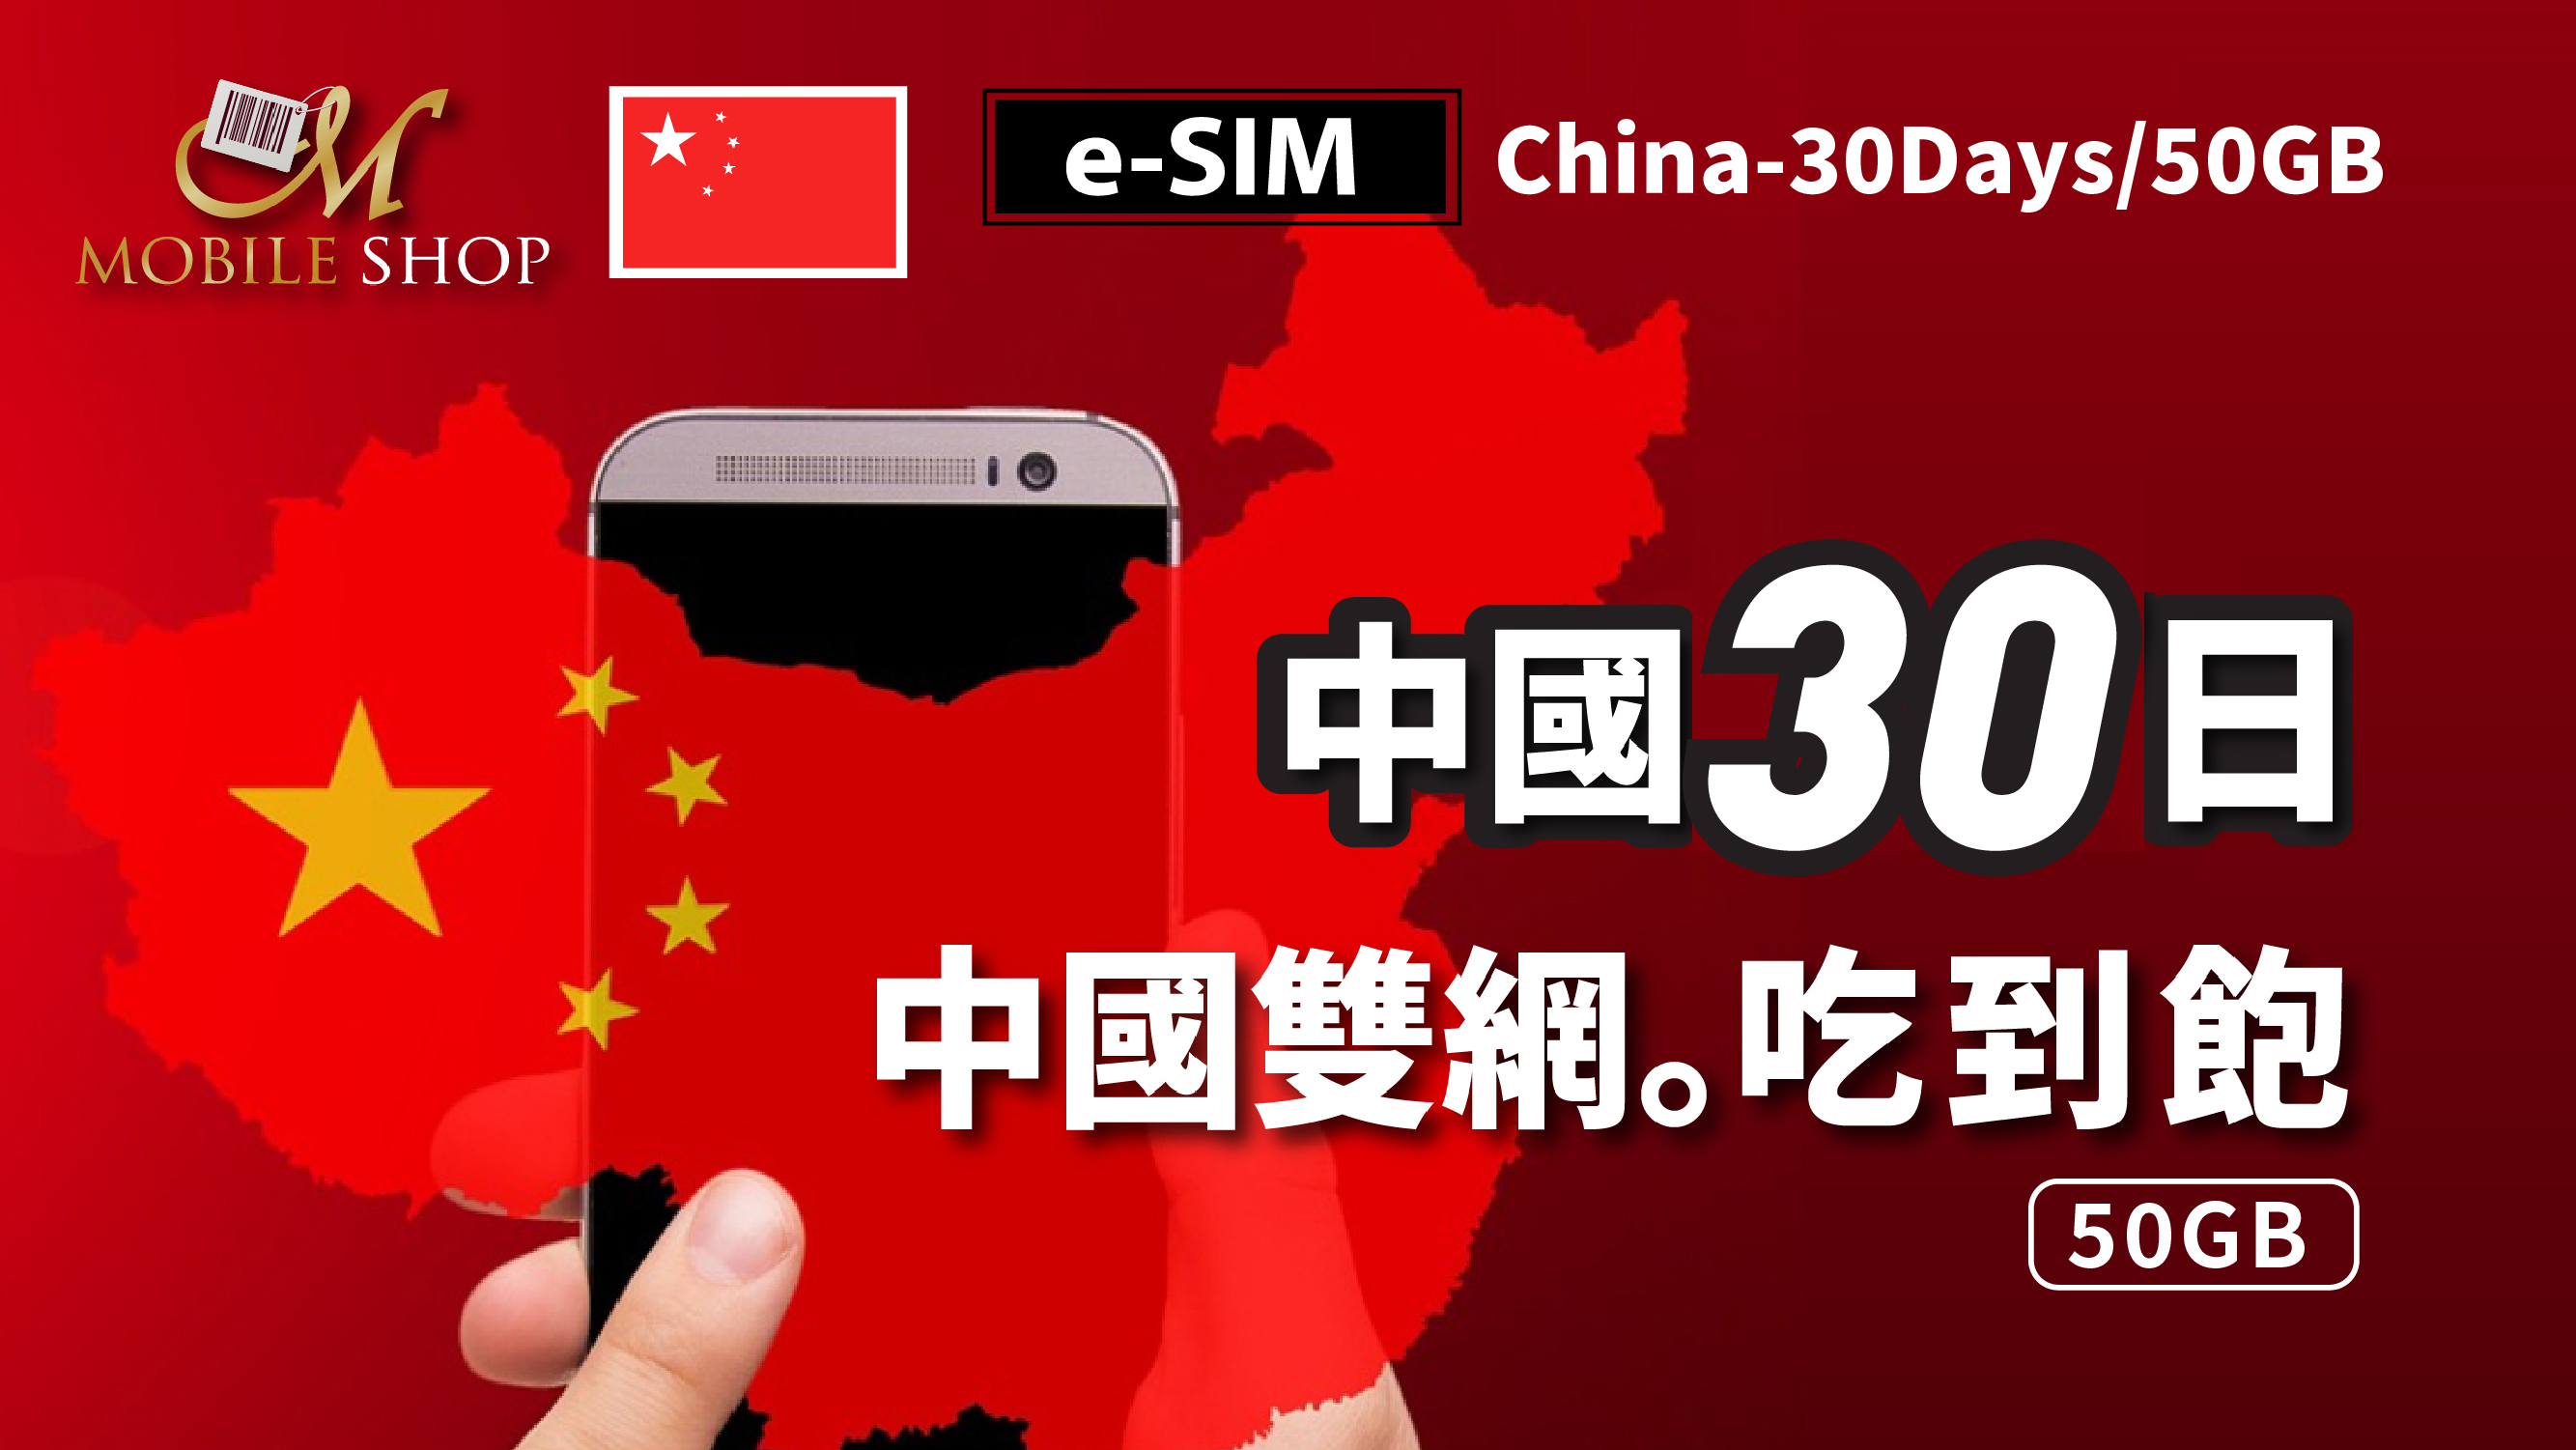 eSIM_China 30Days/50GB unlimited data